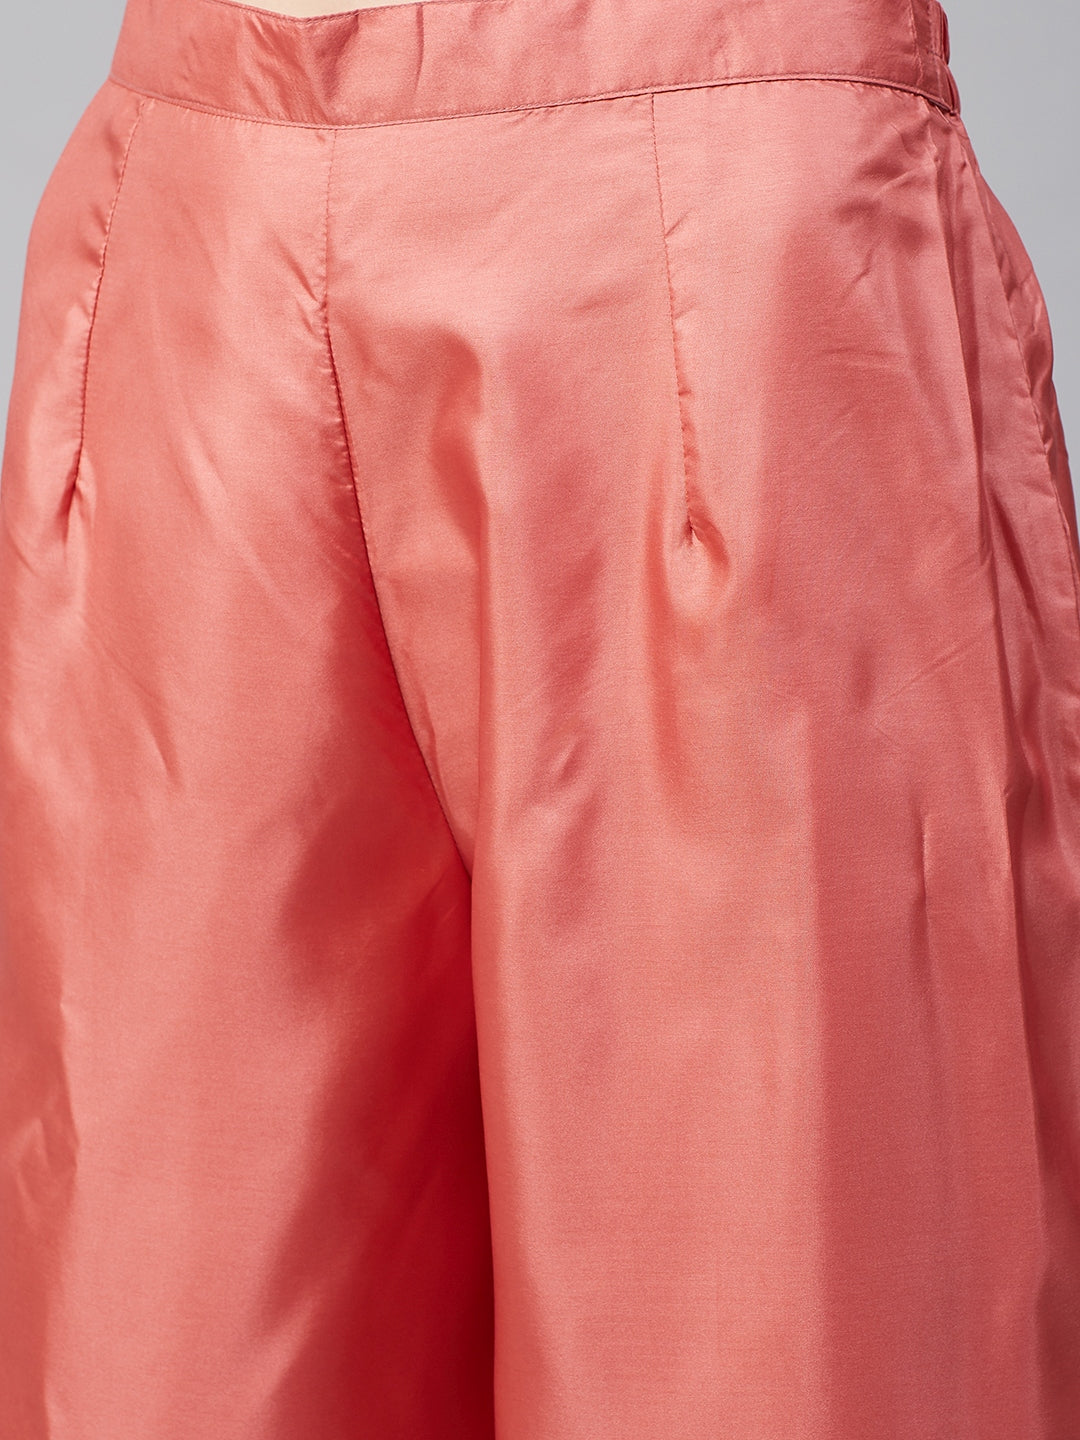 Women's Peach Gotta Patti Lace Details Kurta With Palazzos - Bhama Couture